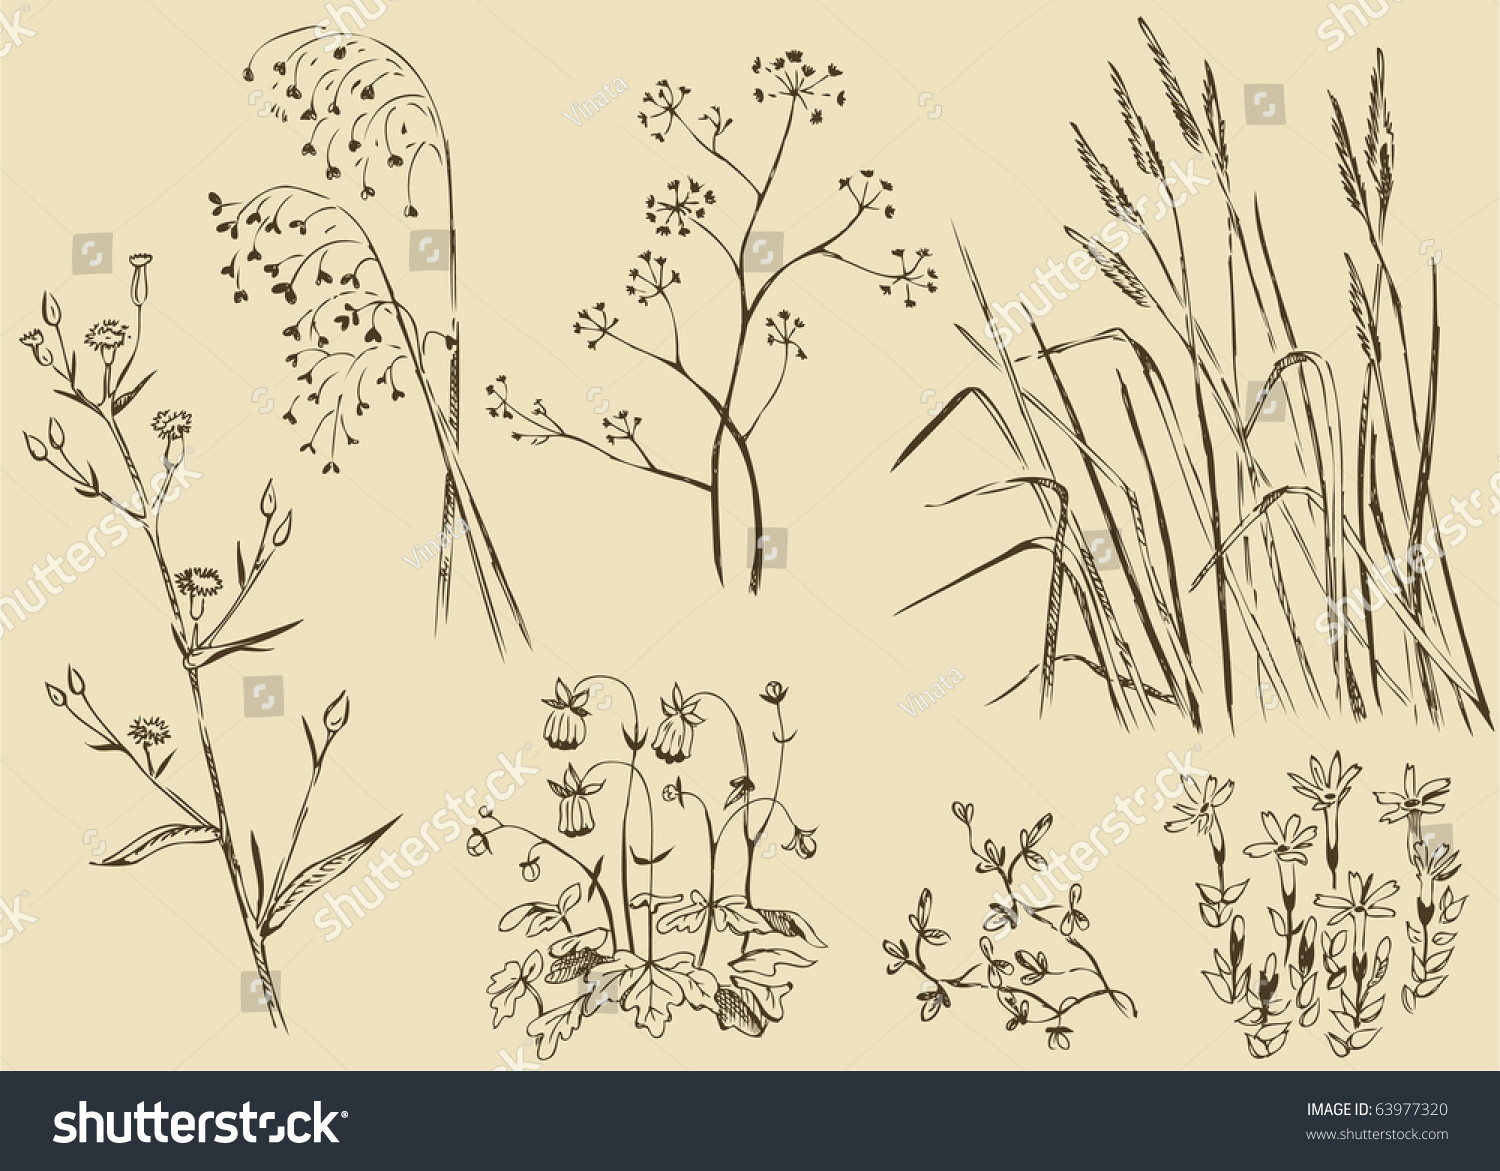 Drawing Vector Fields Field Flowersgrass Stock Vector Royalty Free 63977320 Shutterstock